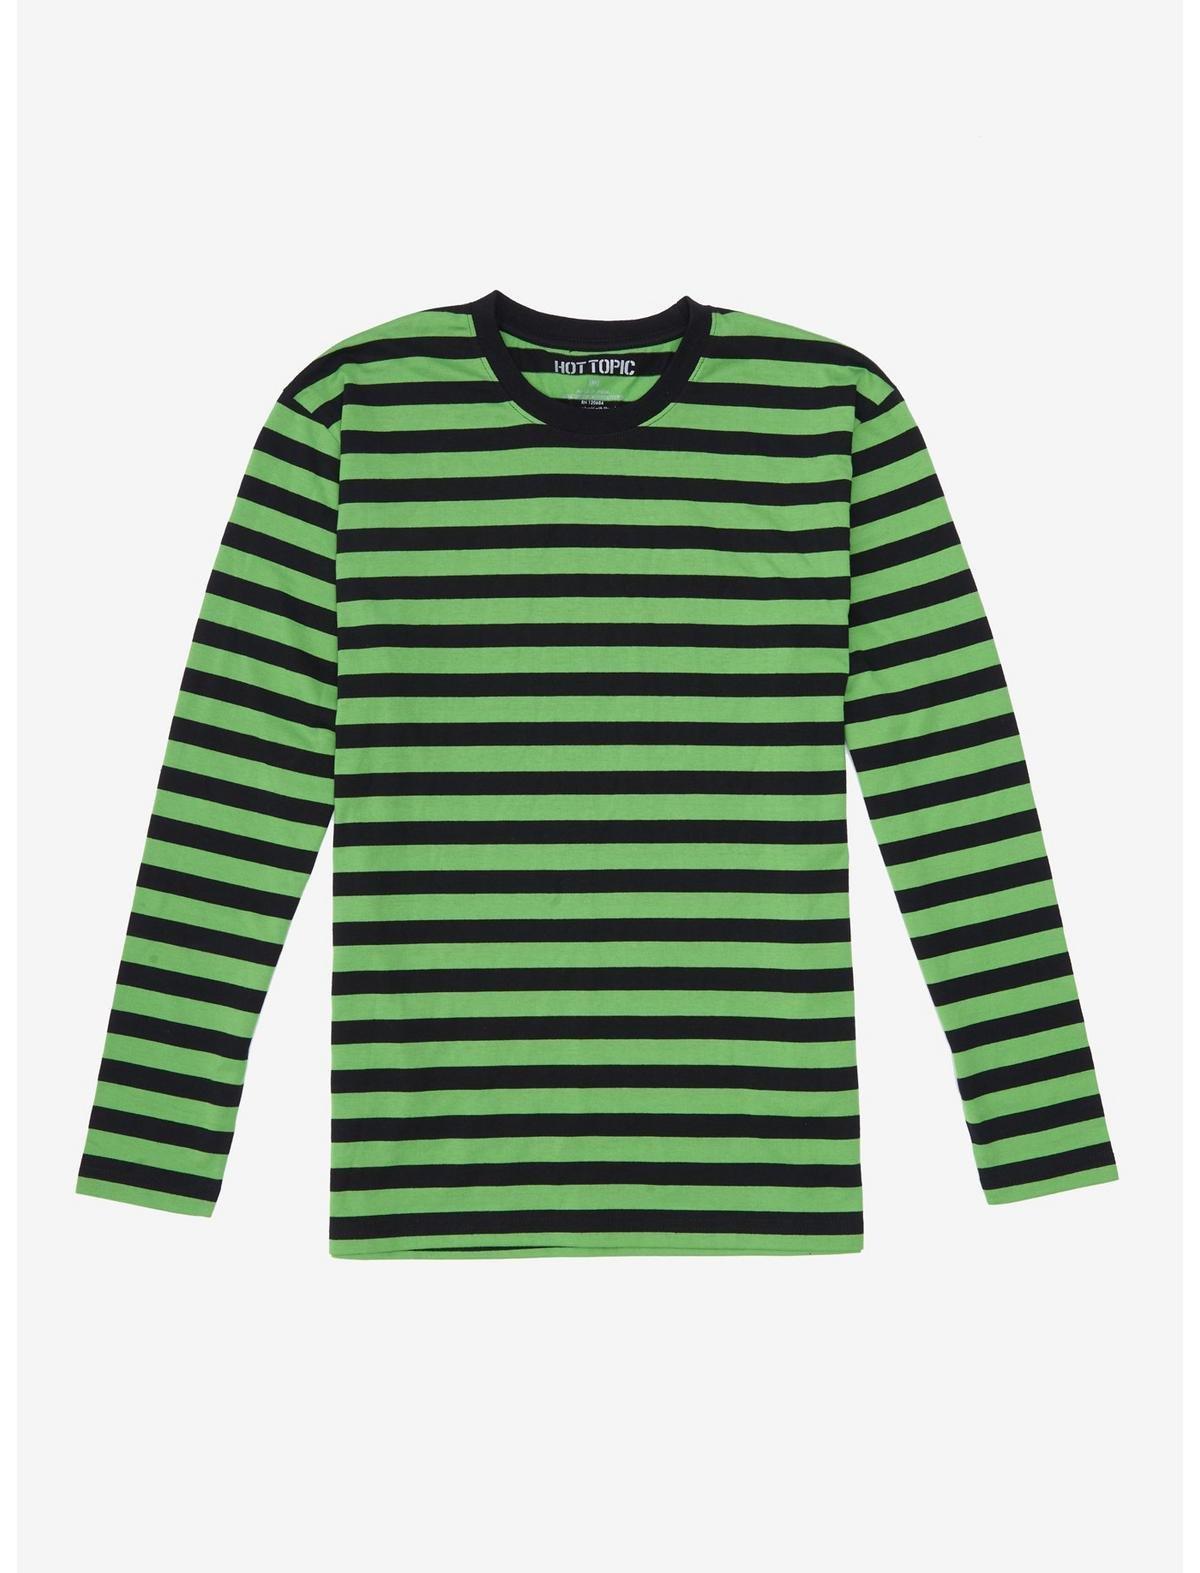 Green & Black Stripe Long-Sleeve T-Shirt | Hot Topic